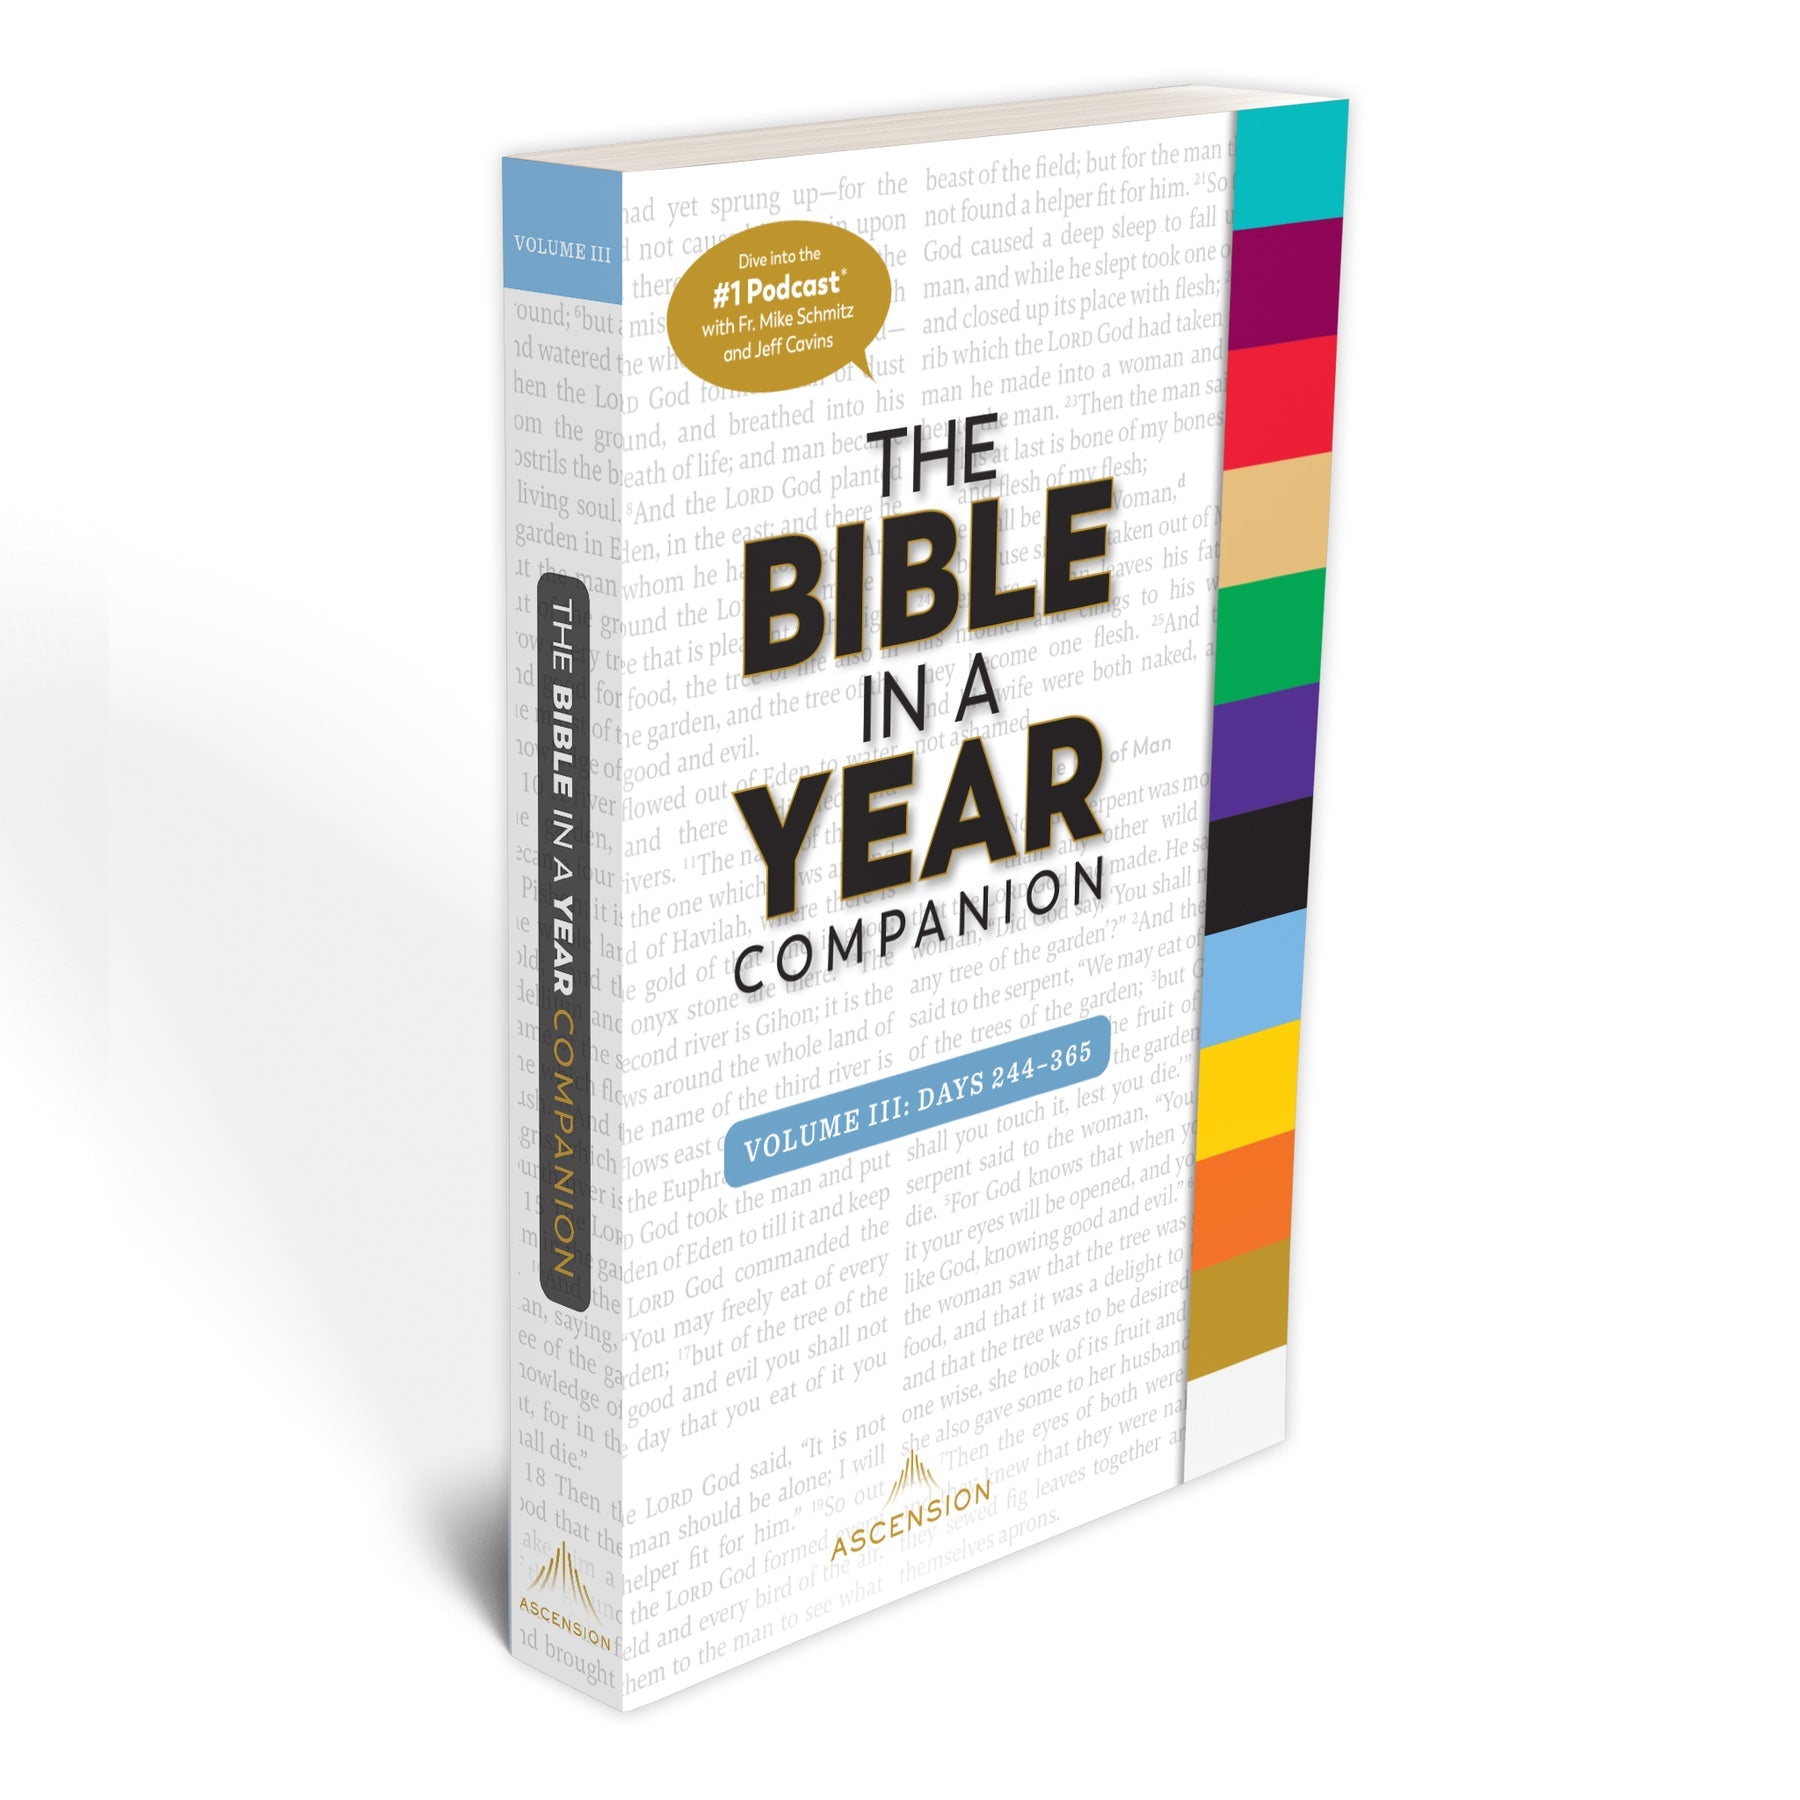 The Bible in a Year Companion Volume III